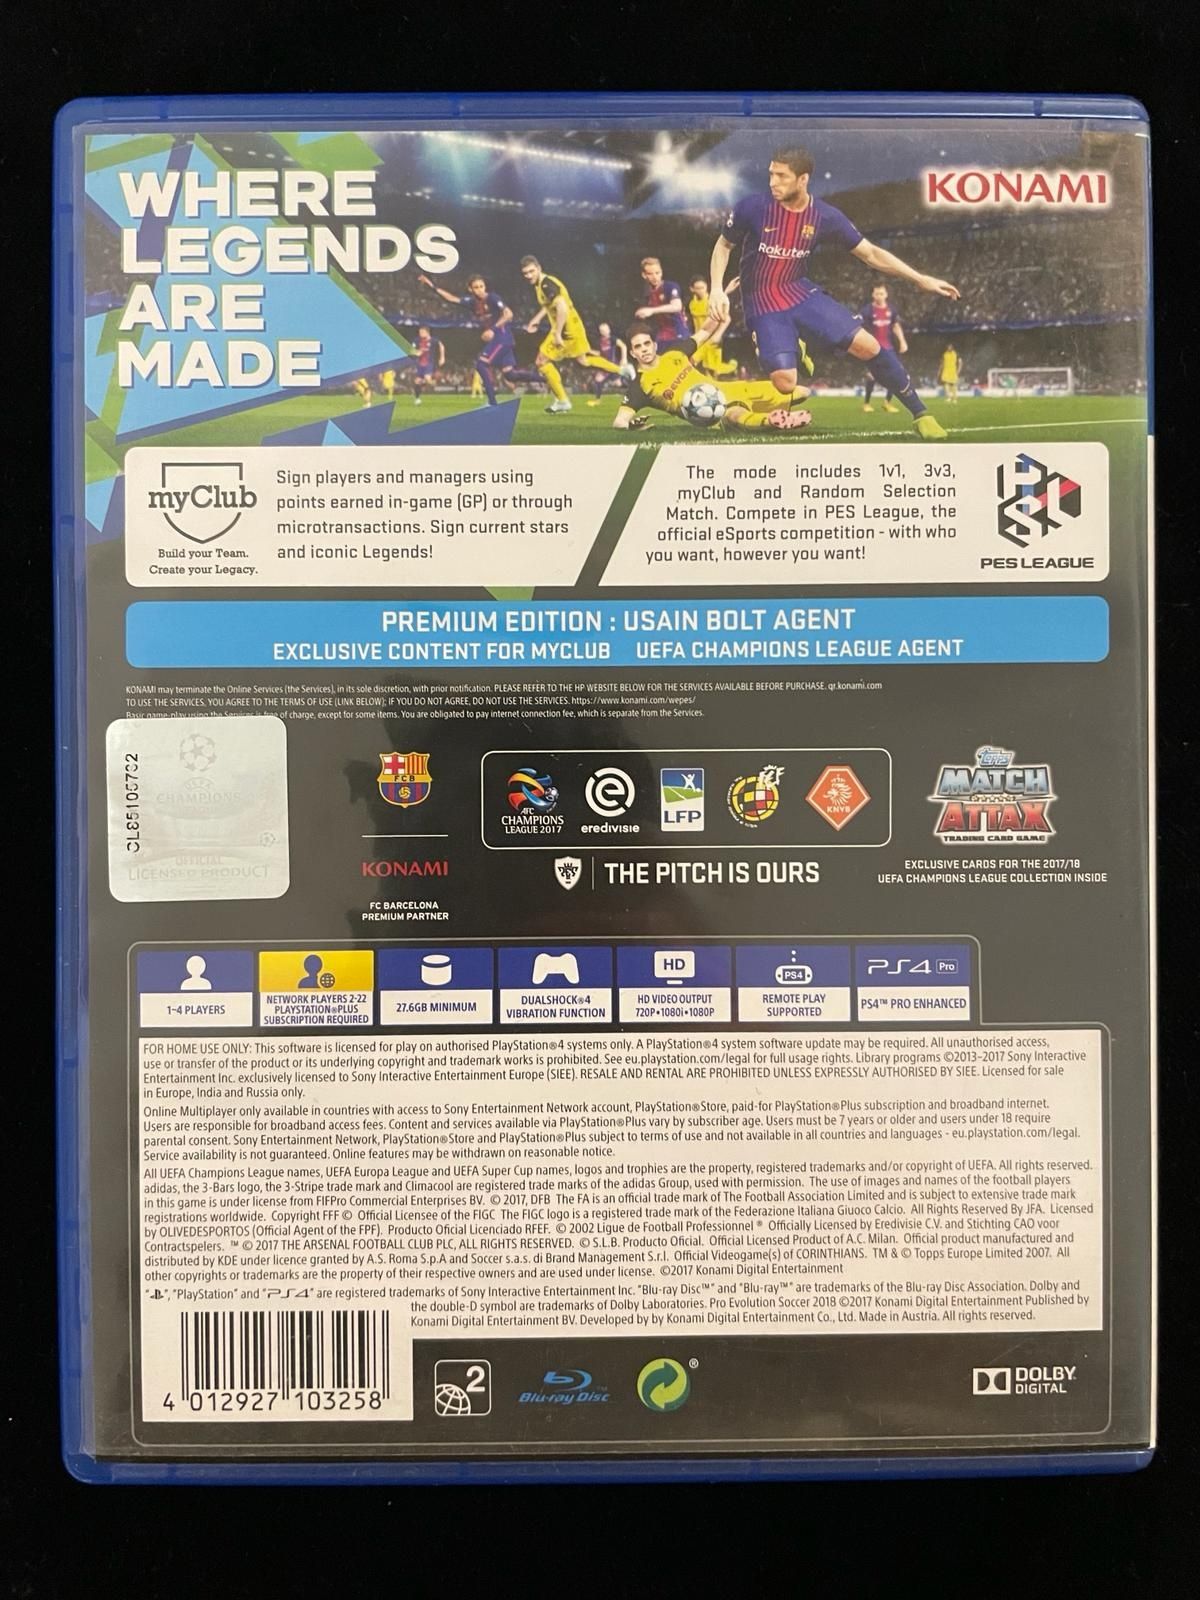 Pro Evolution Soccer PES 2018 na PS4 i PS5 w BDB stanie 3xA UEFA